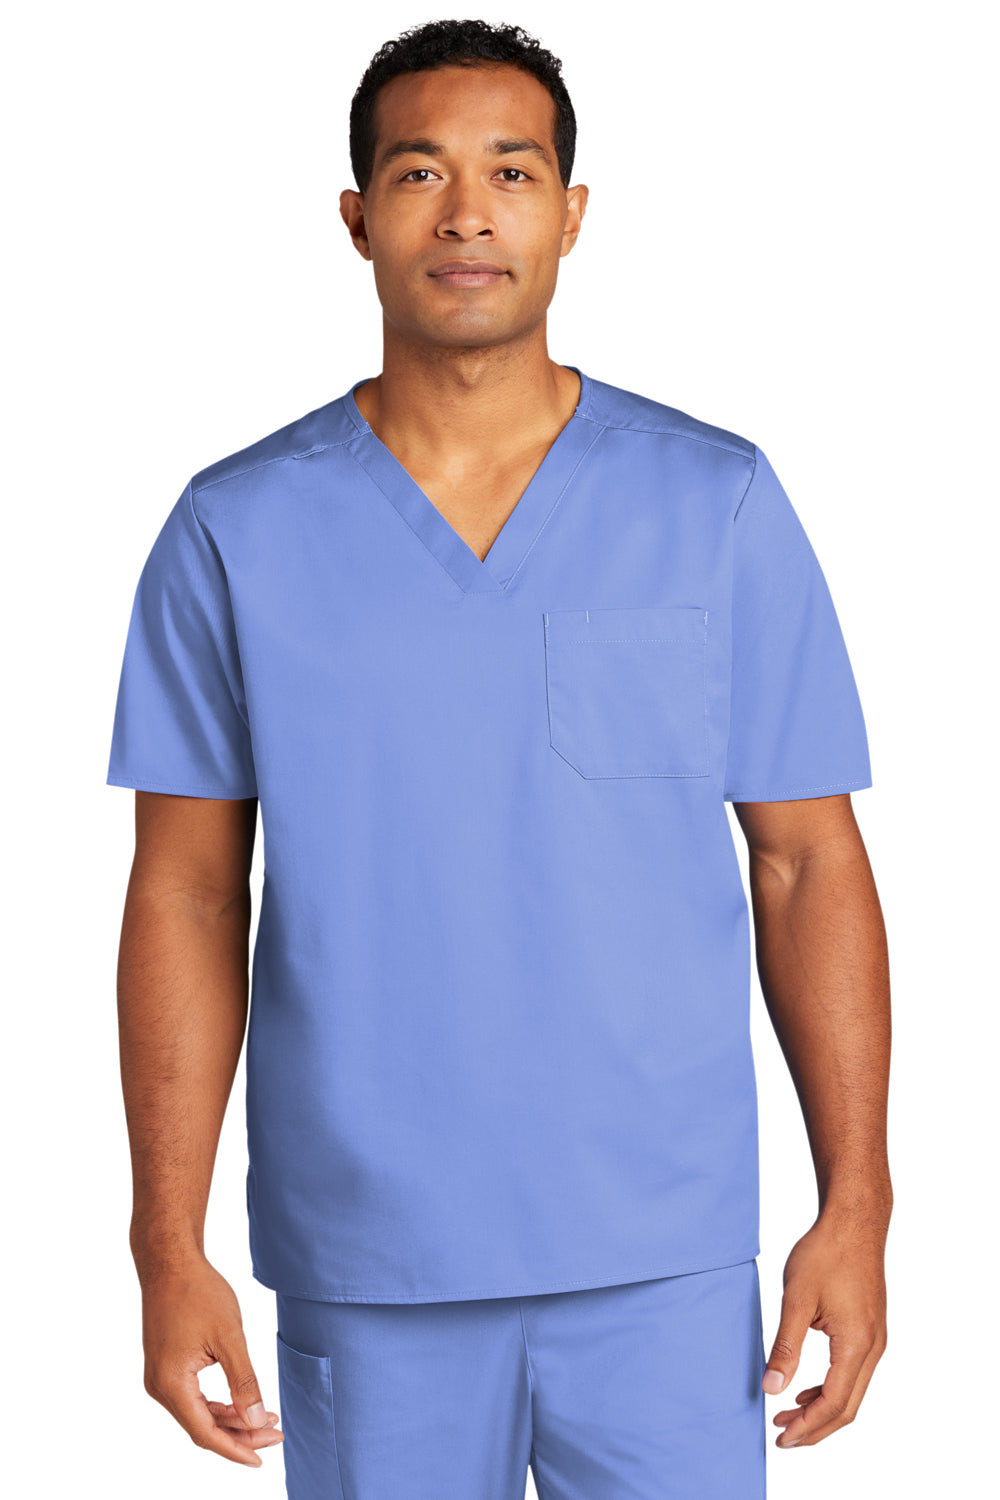 Wonderwink WW3160 WorkFlex Short Sleeve V-Neck Shirt w/ Pocket Ceil Blue Front